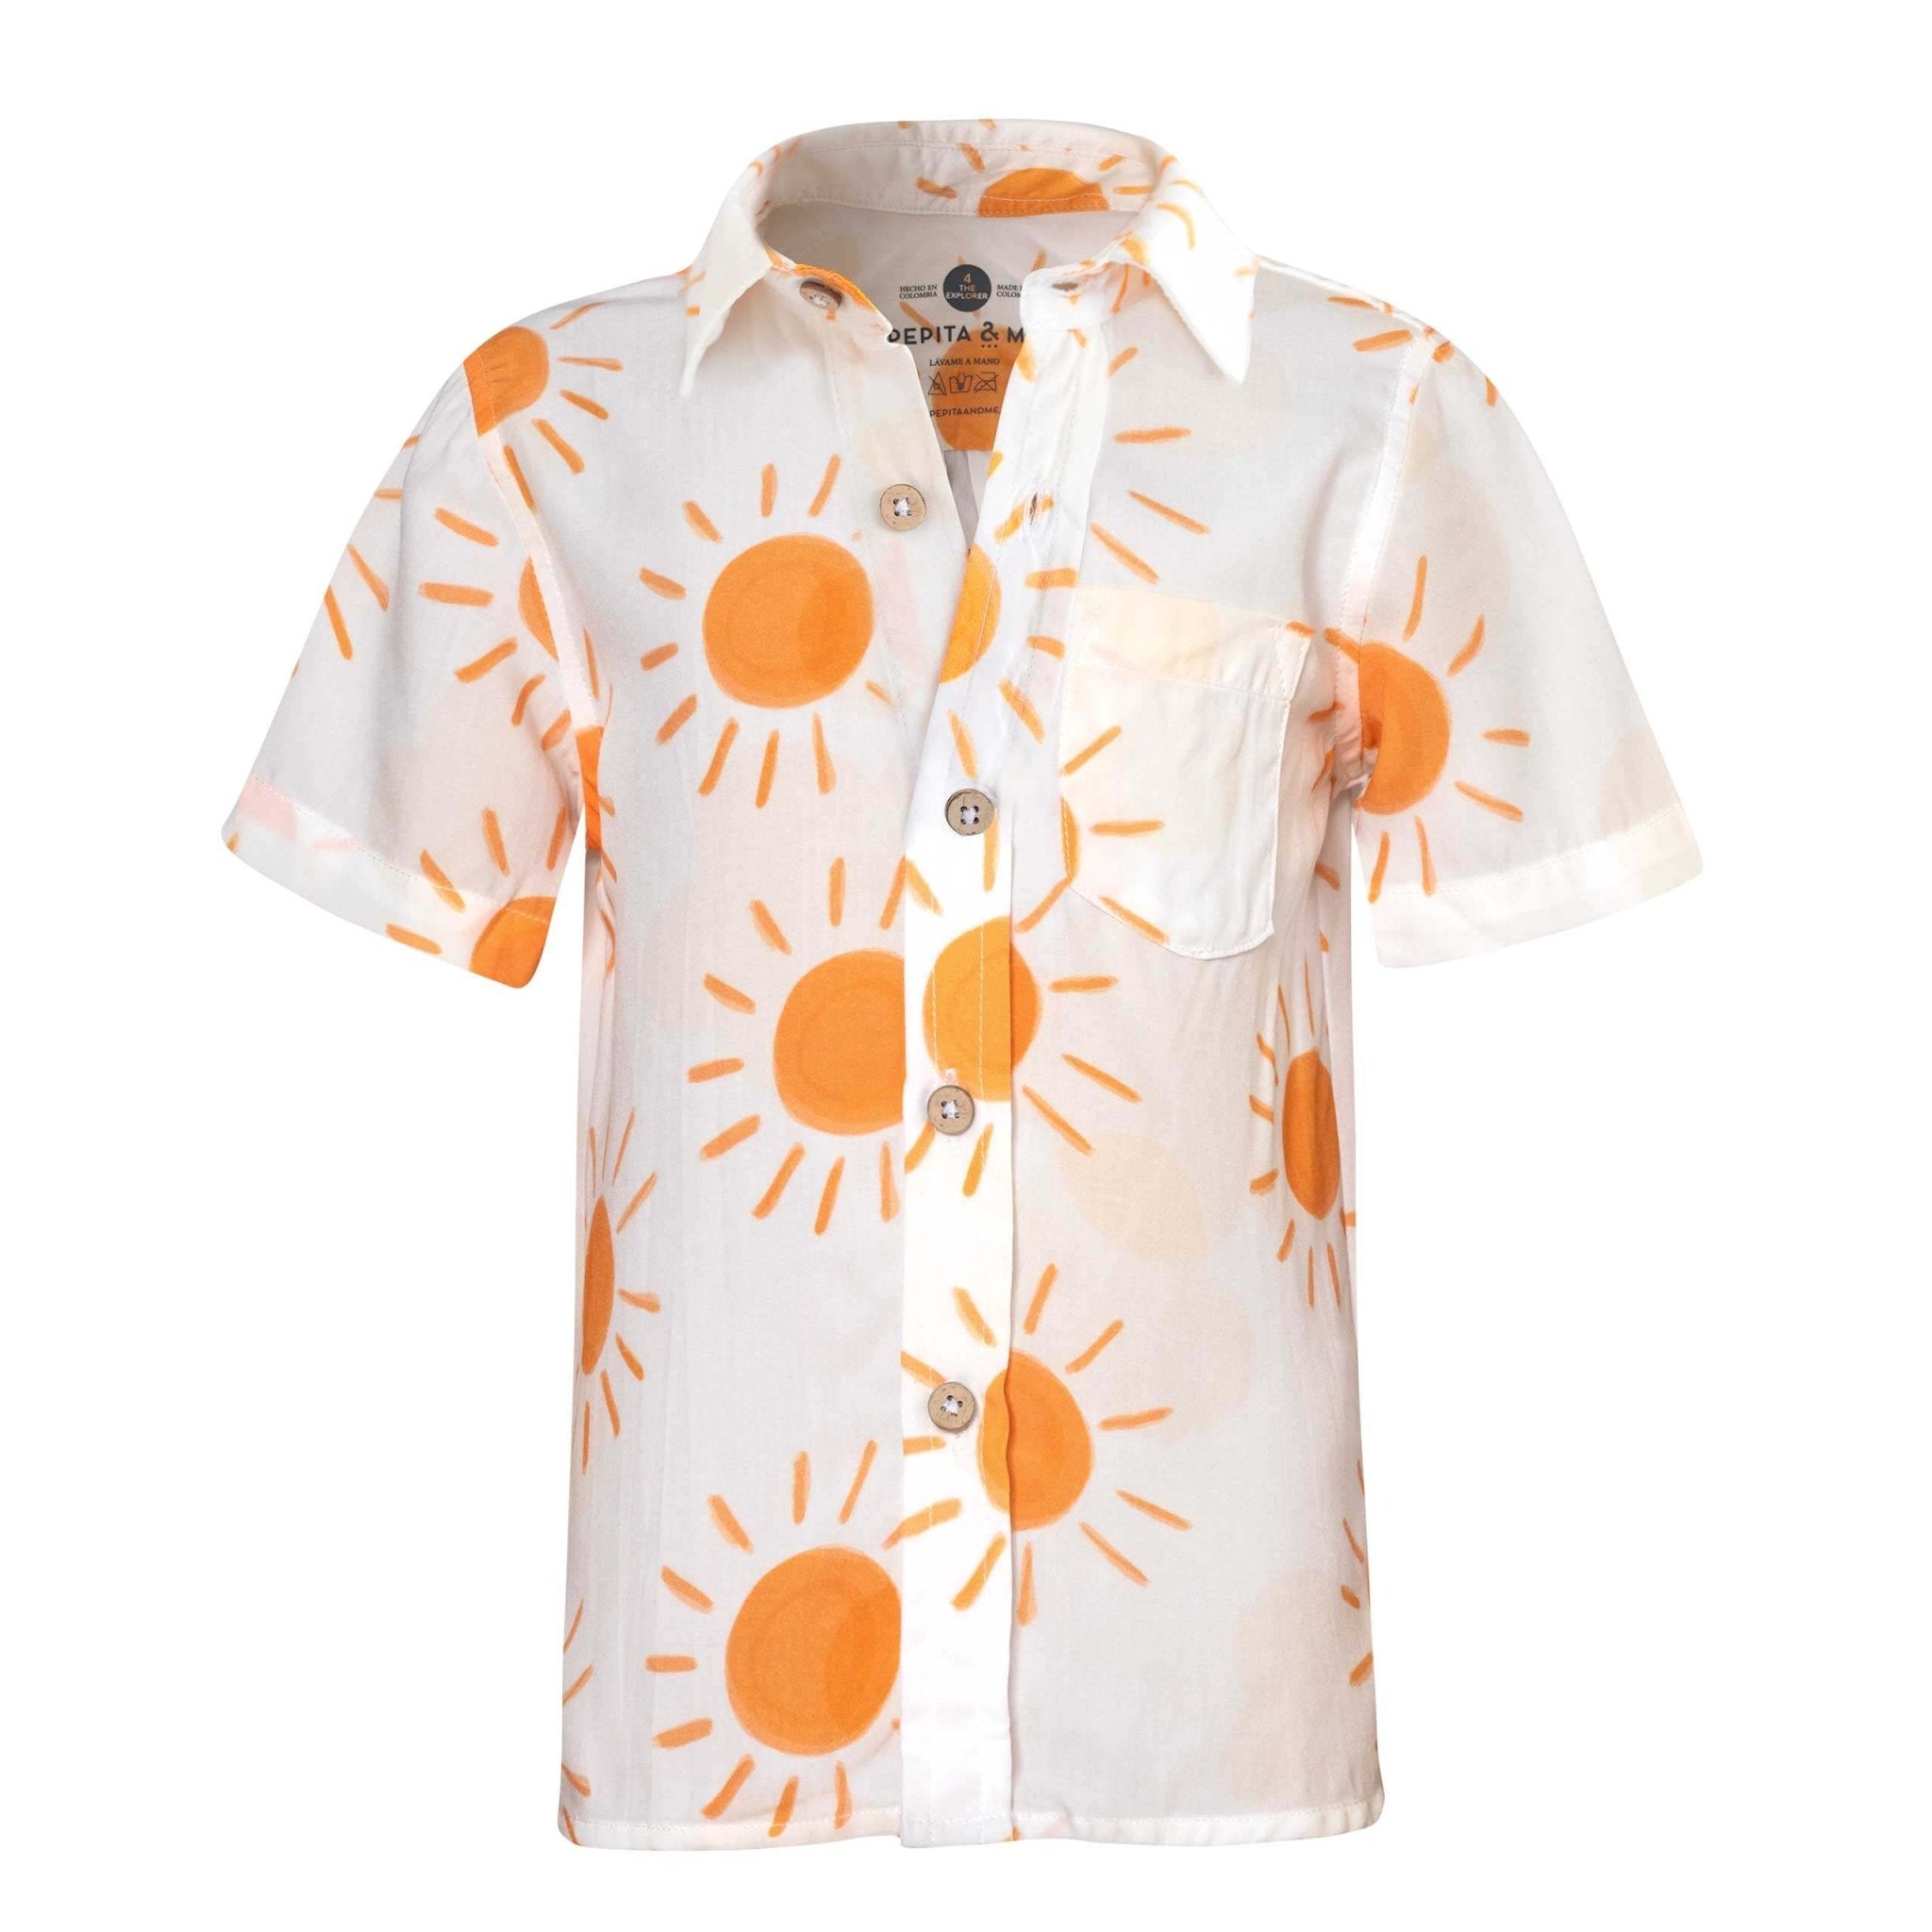 White Sunshine shirt with orange suns against a white backgroud